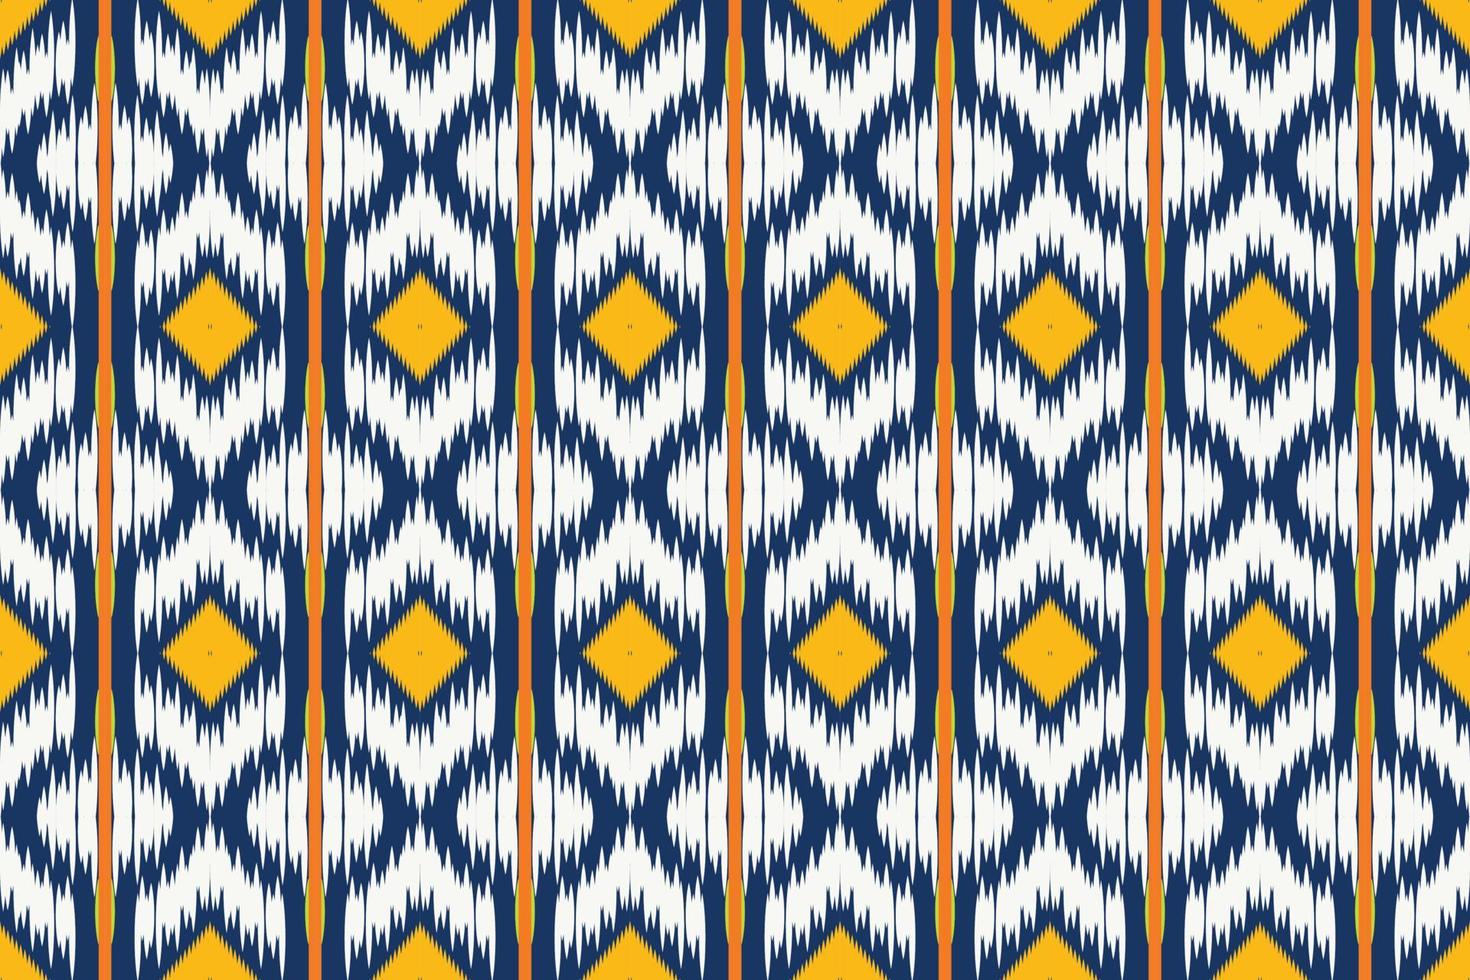 motivo ikat azteco tribale astratto Borneo scandinavo batik boemo struttura digitale vettore design per Stampa saree Kurti tessuto spazzola simboli campioni